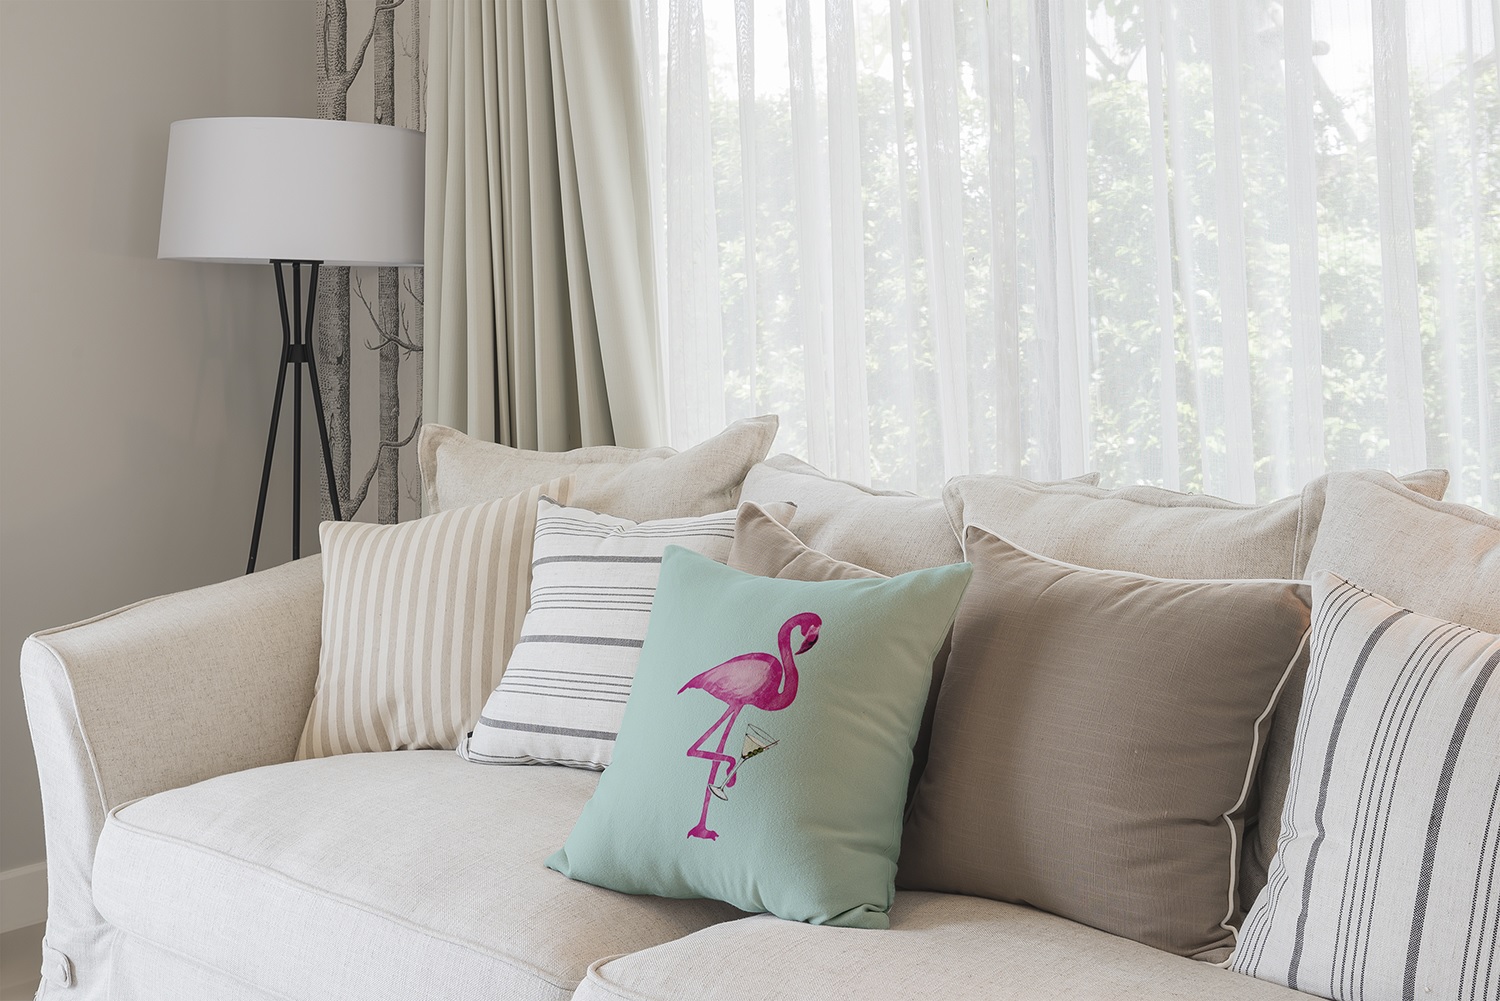 Contemporary Home Living 20" x 20" Blue and Pink Single Flamingo Square Throw Pillow